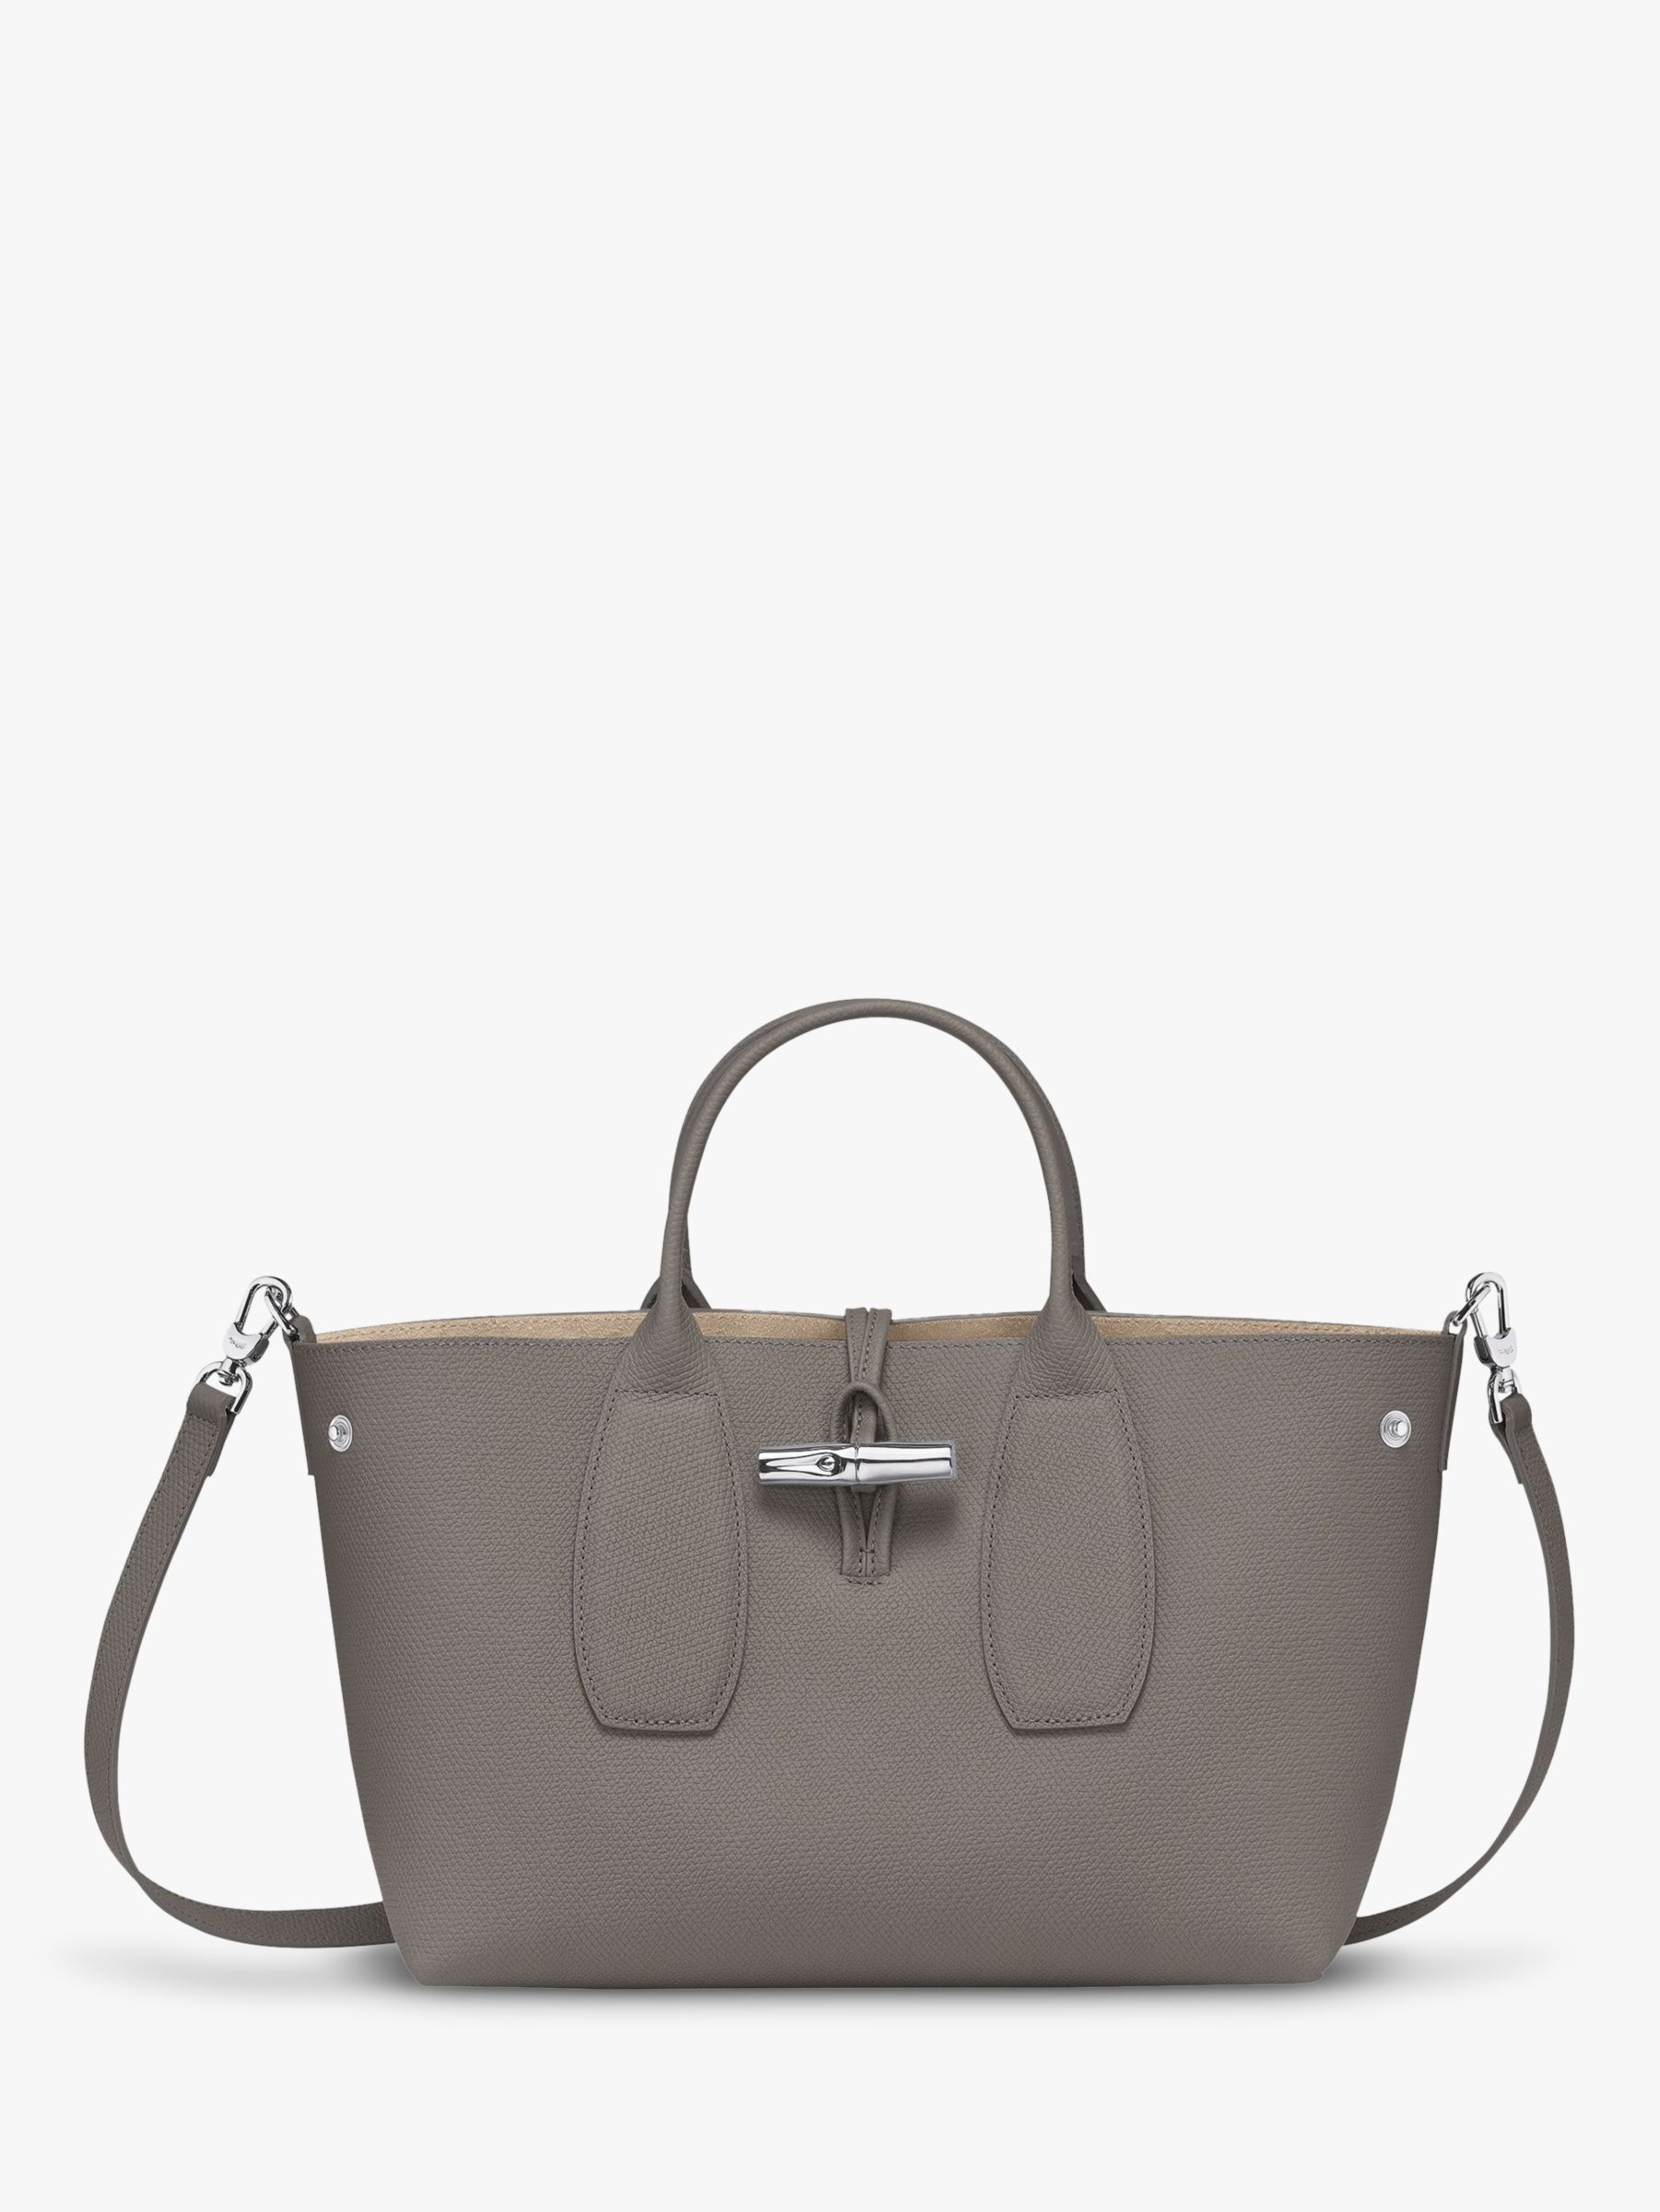 Longchamp Roseau Medium Leather Top Handle Bag, Turtledove